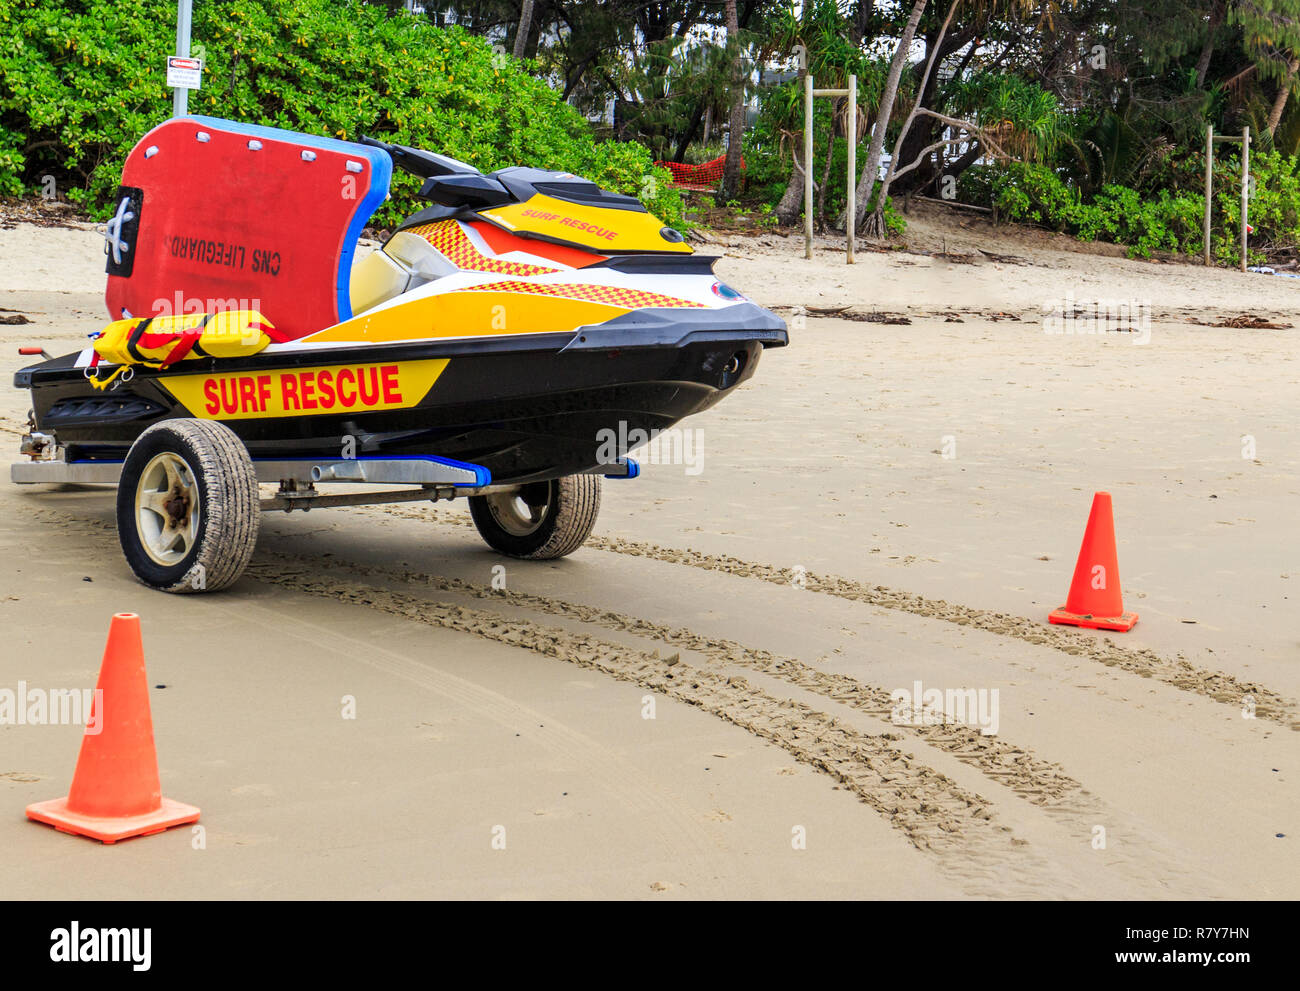 Surf rescue jetski and life saving equipment on beach, Port Douglas, Queensland, Australia Stock Photo